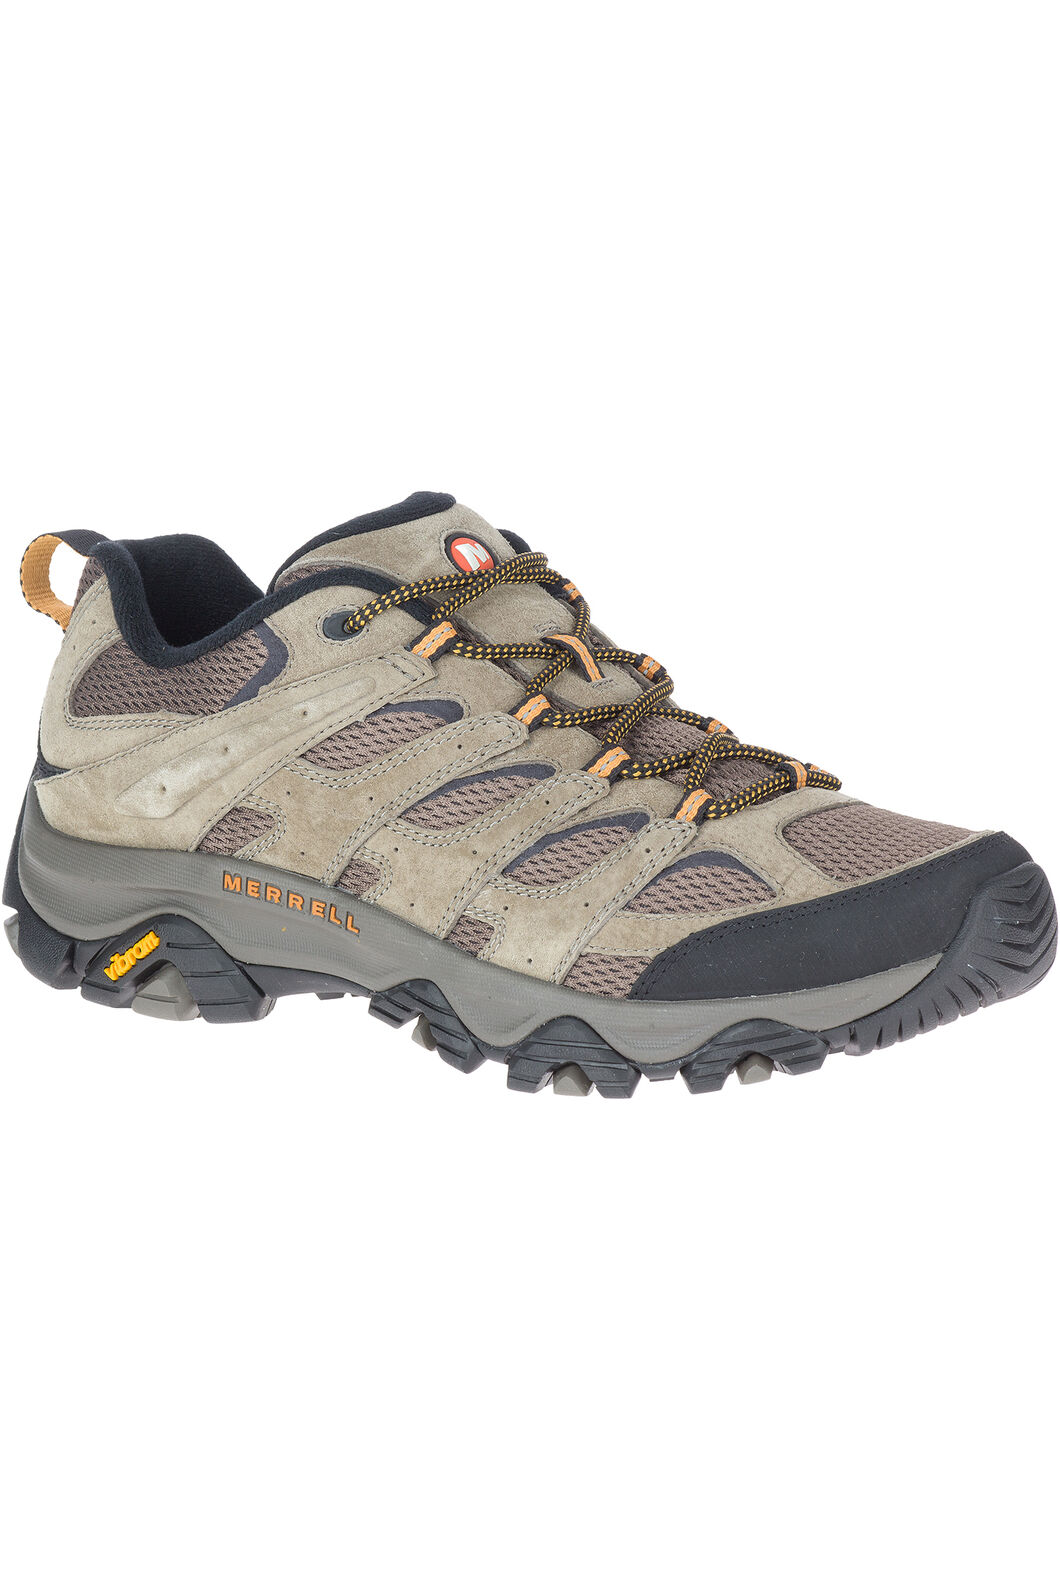 Merrell Men's Moab 3 Ventilator Hiking Shoes | Macpac